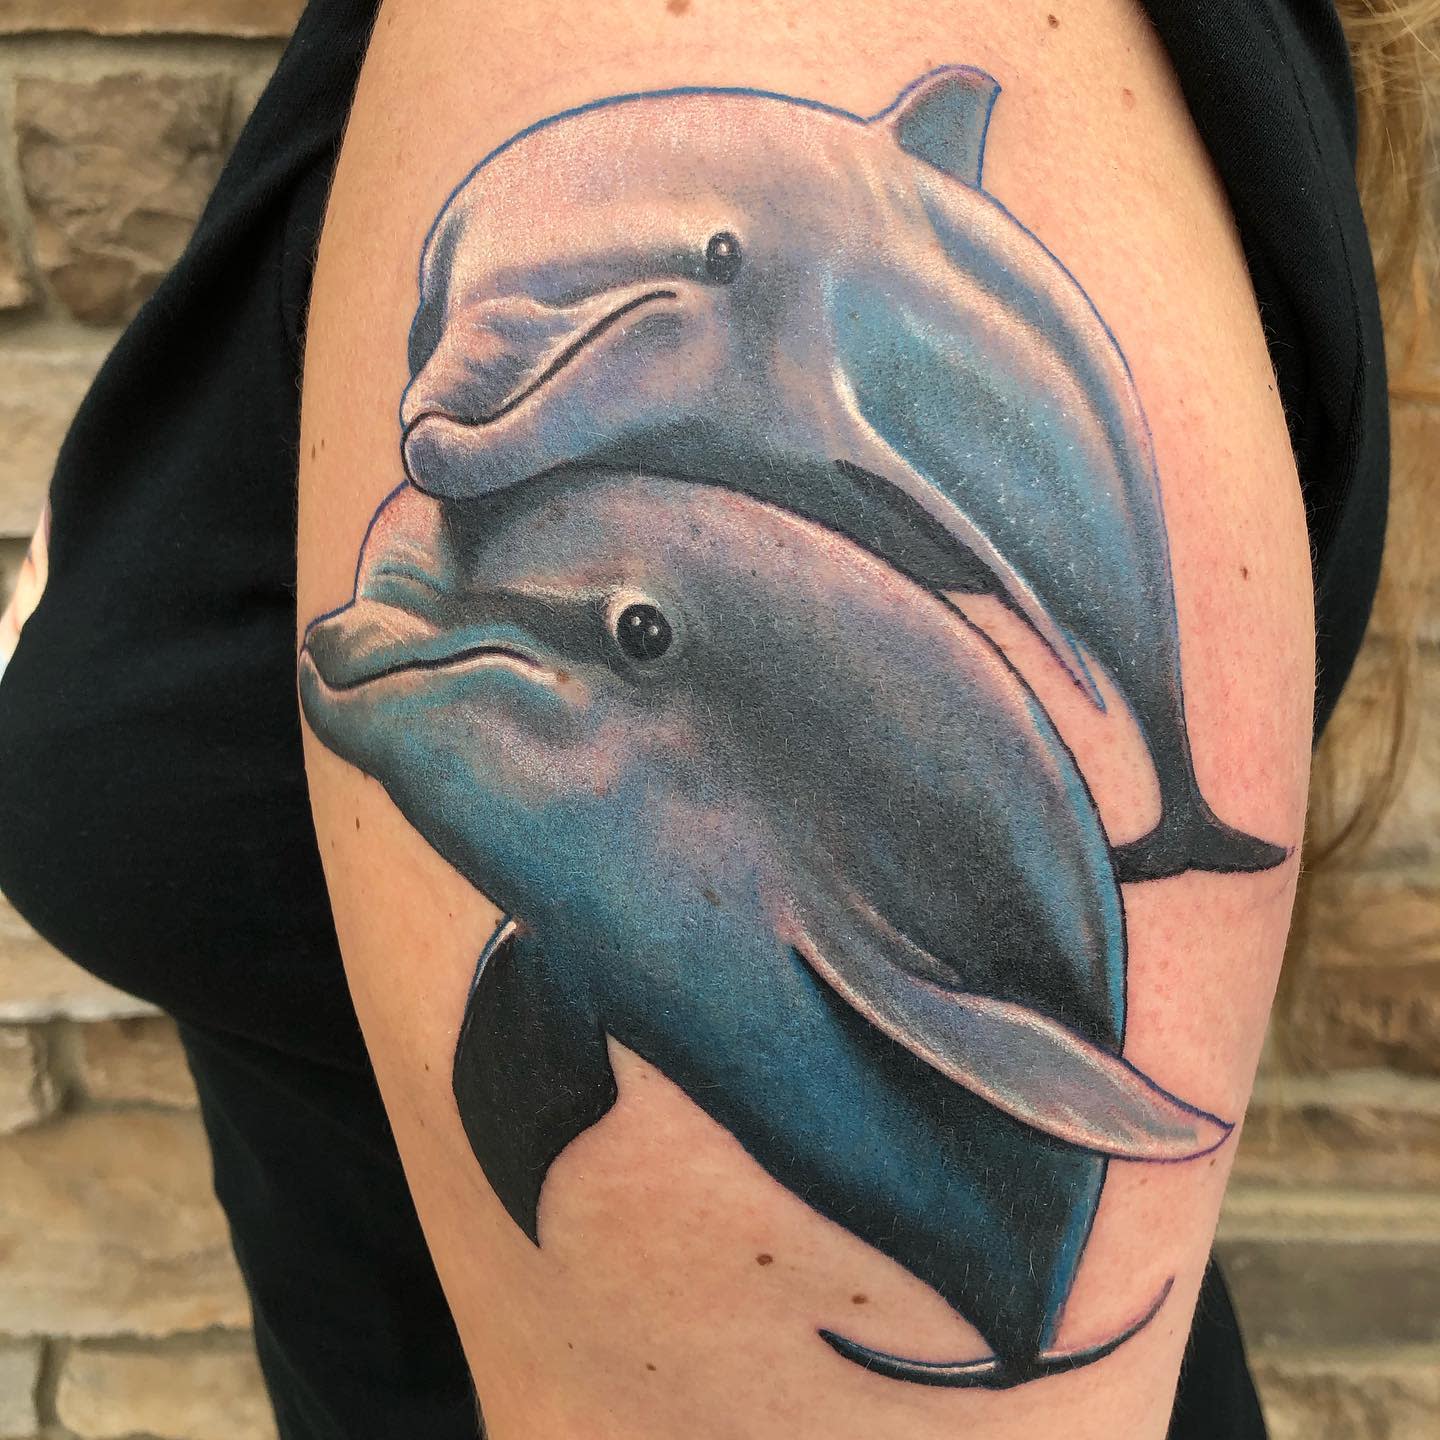 ArtStation - Dolphin tattoo with Roman numerals